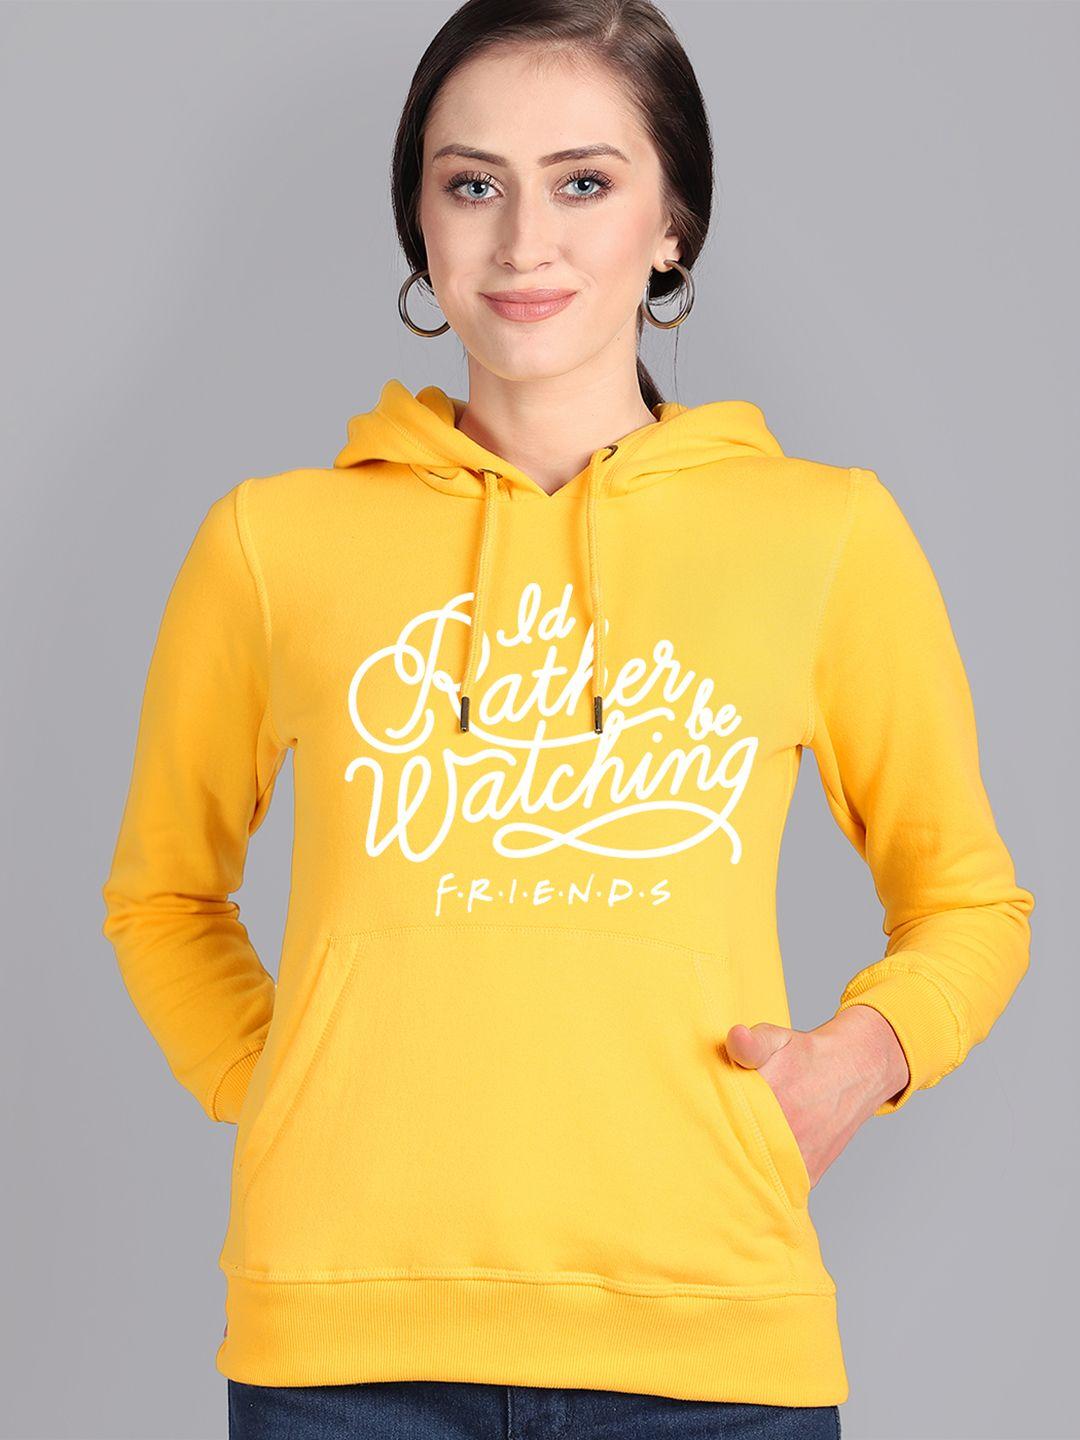 free authority women yellow printed hooded sweatshirt